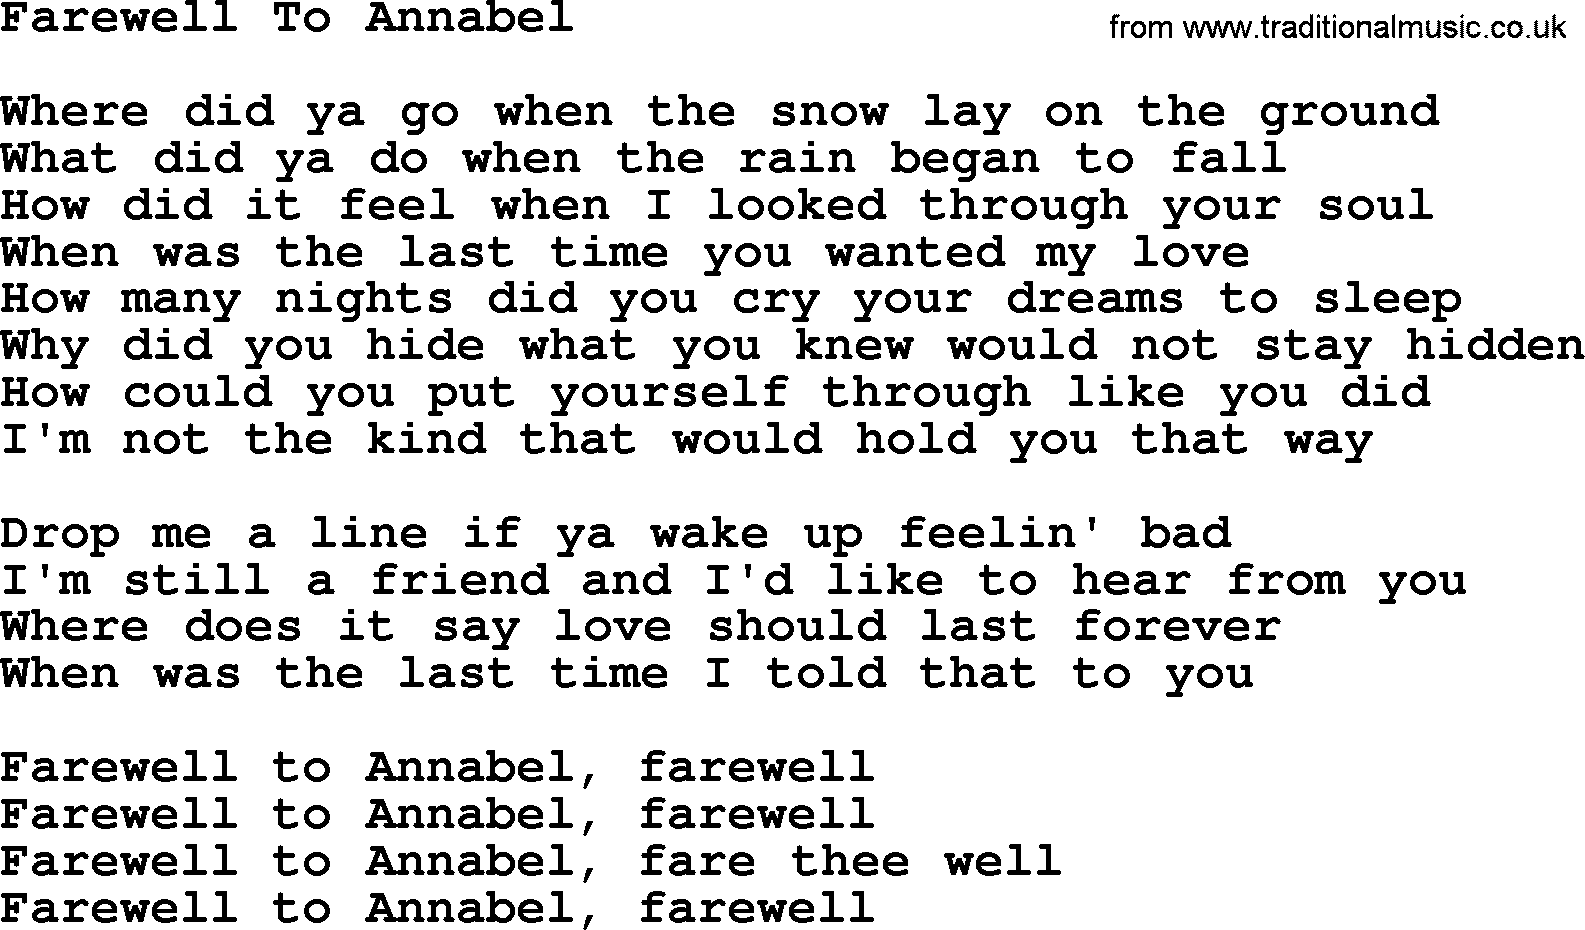 Gordon Lightfoot song Farewell To Annabel, lyrics